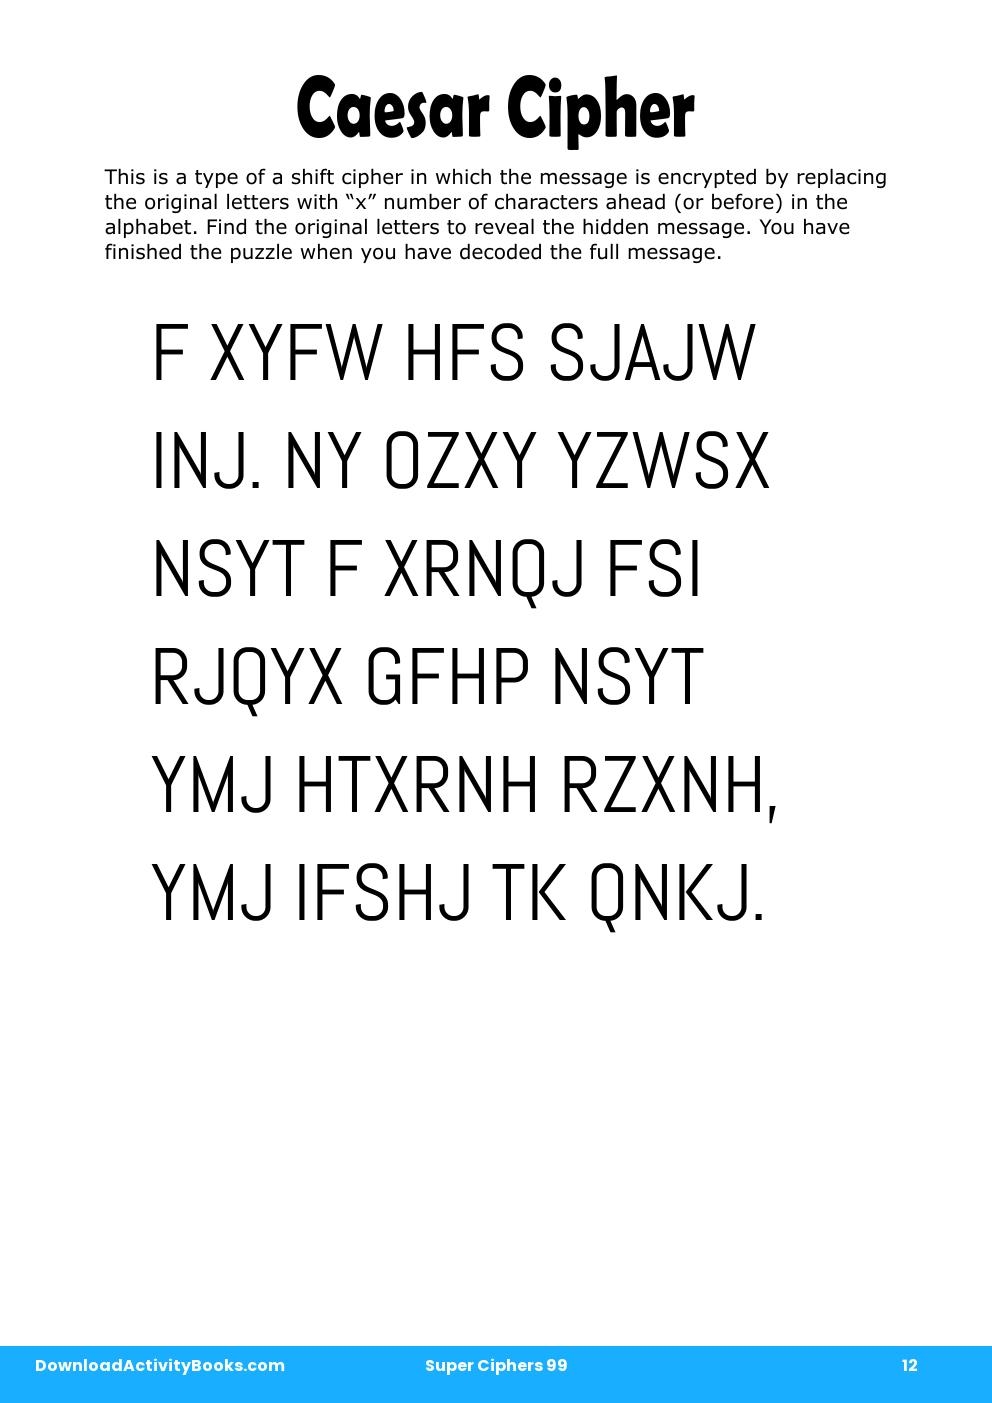 Caesar Cipher in Super Ciphers 99